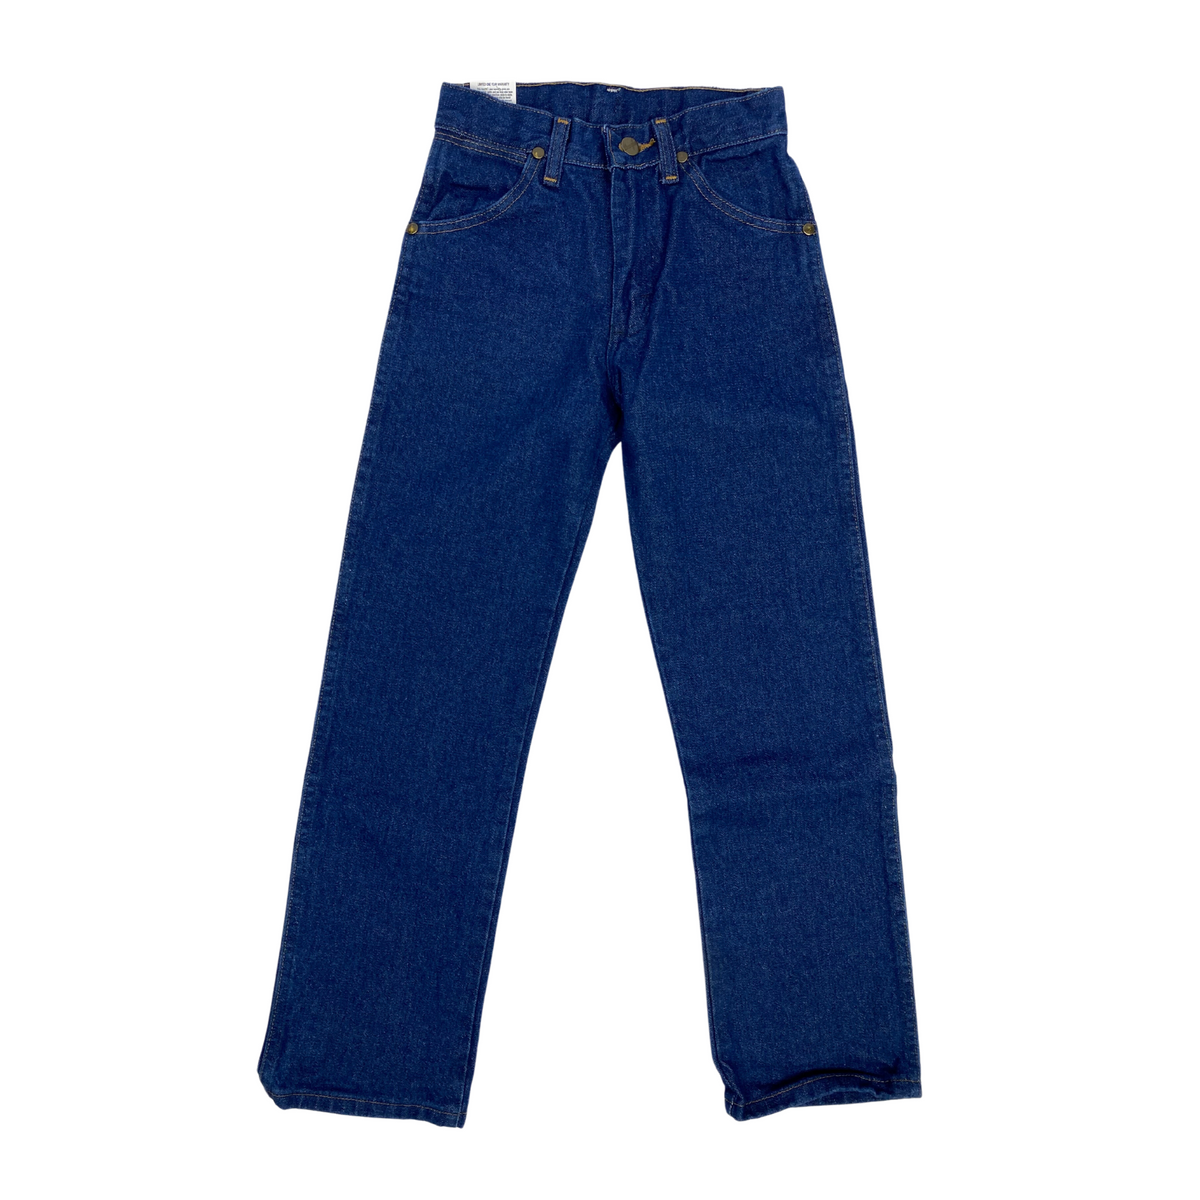 Boy's Wrangler Cowboy Cut Original Fit Prewashed Jeans (8-16)